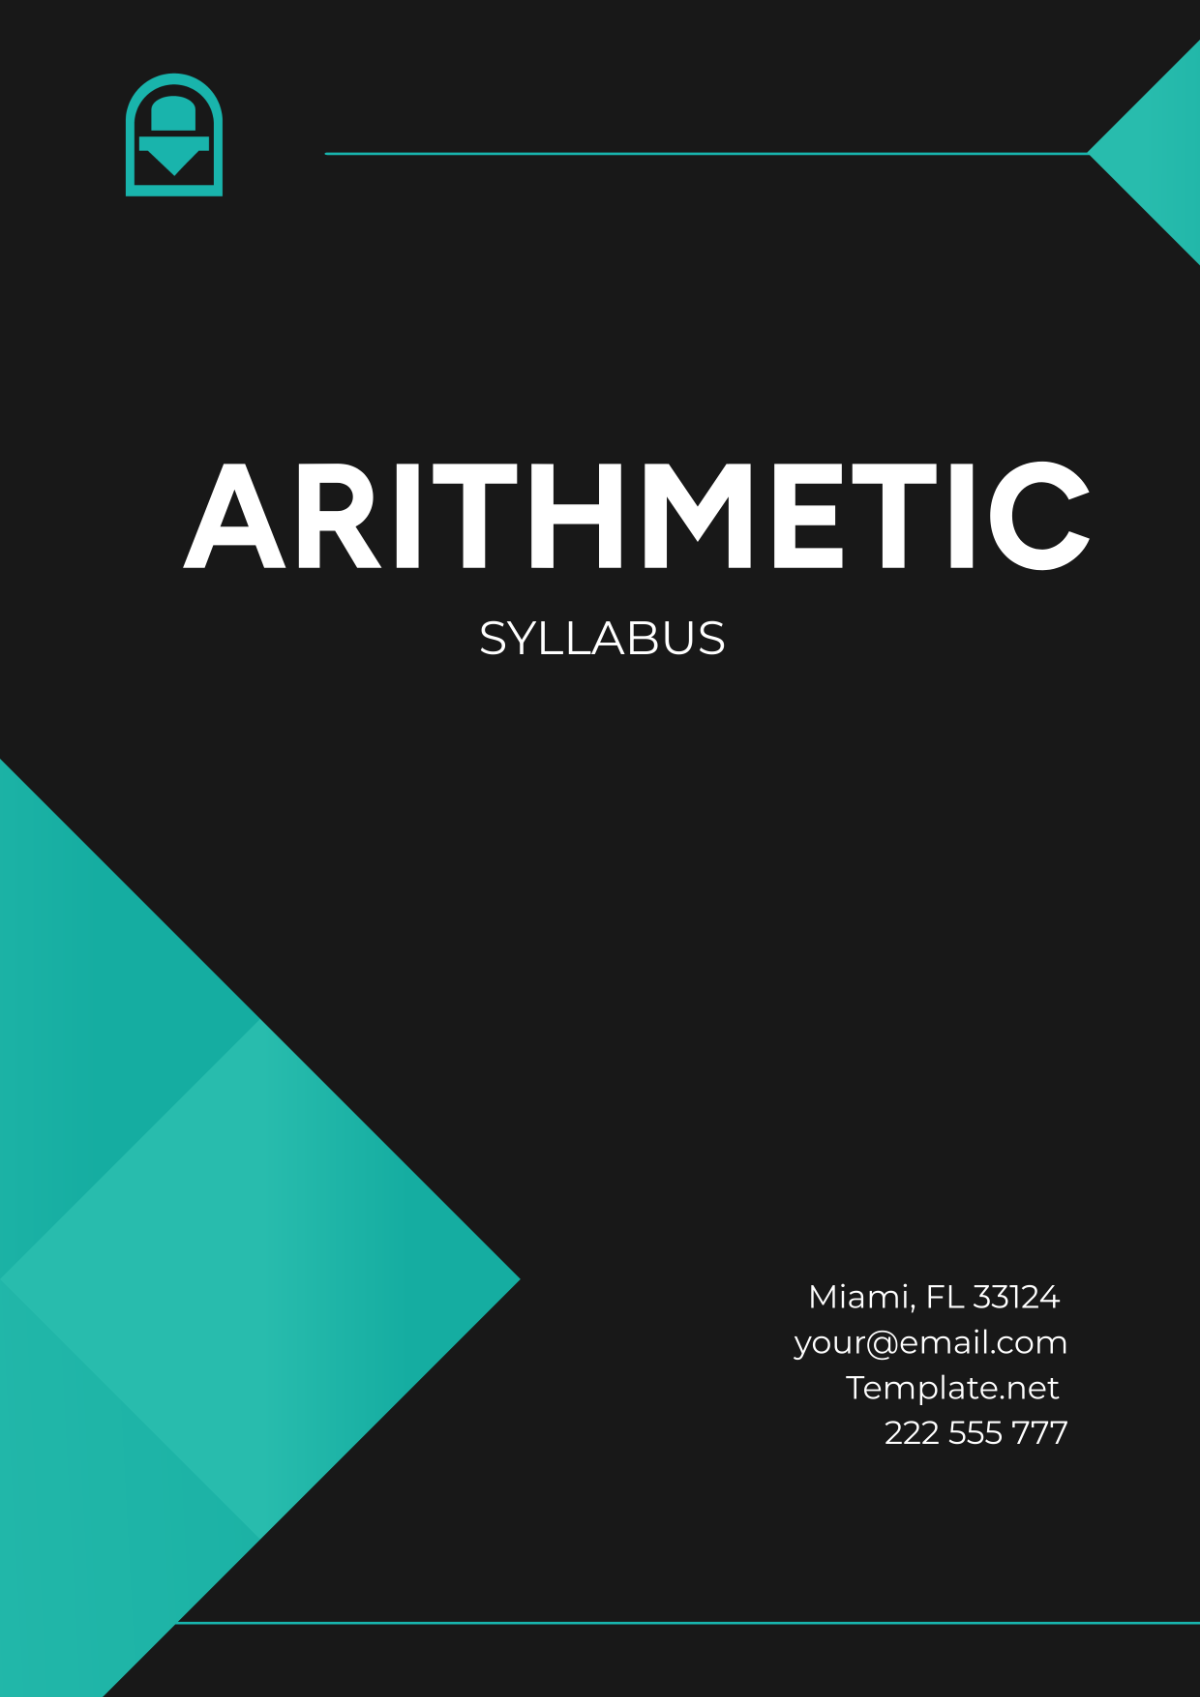 Arithmetic Syllabus Template